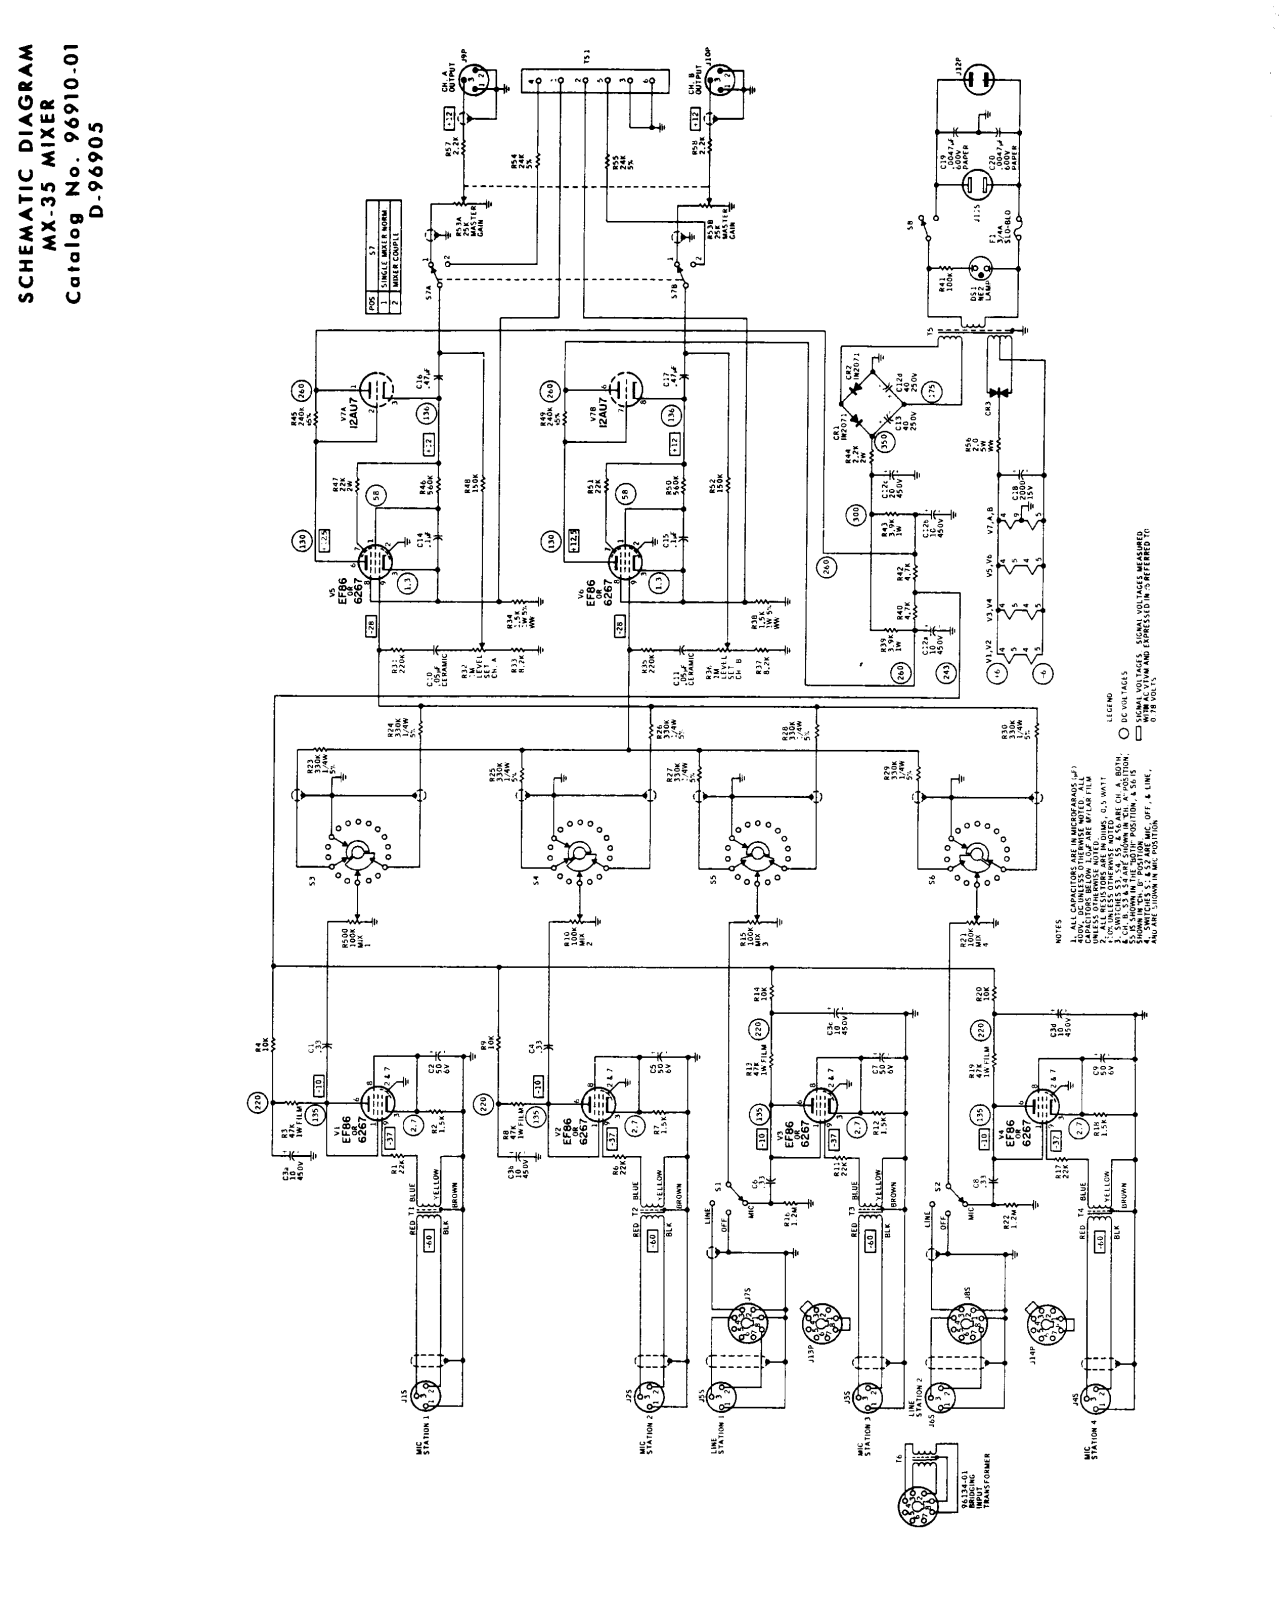 Ampex mx 10, mx 35 schematic